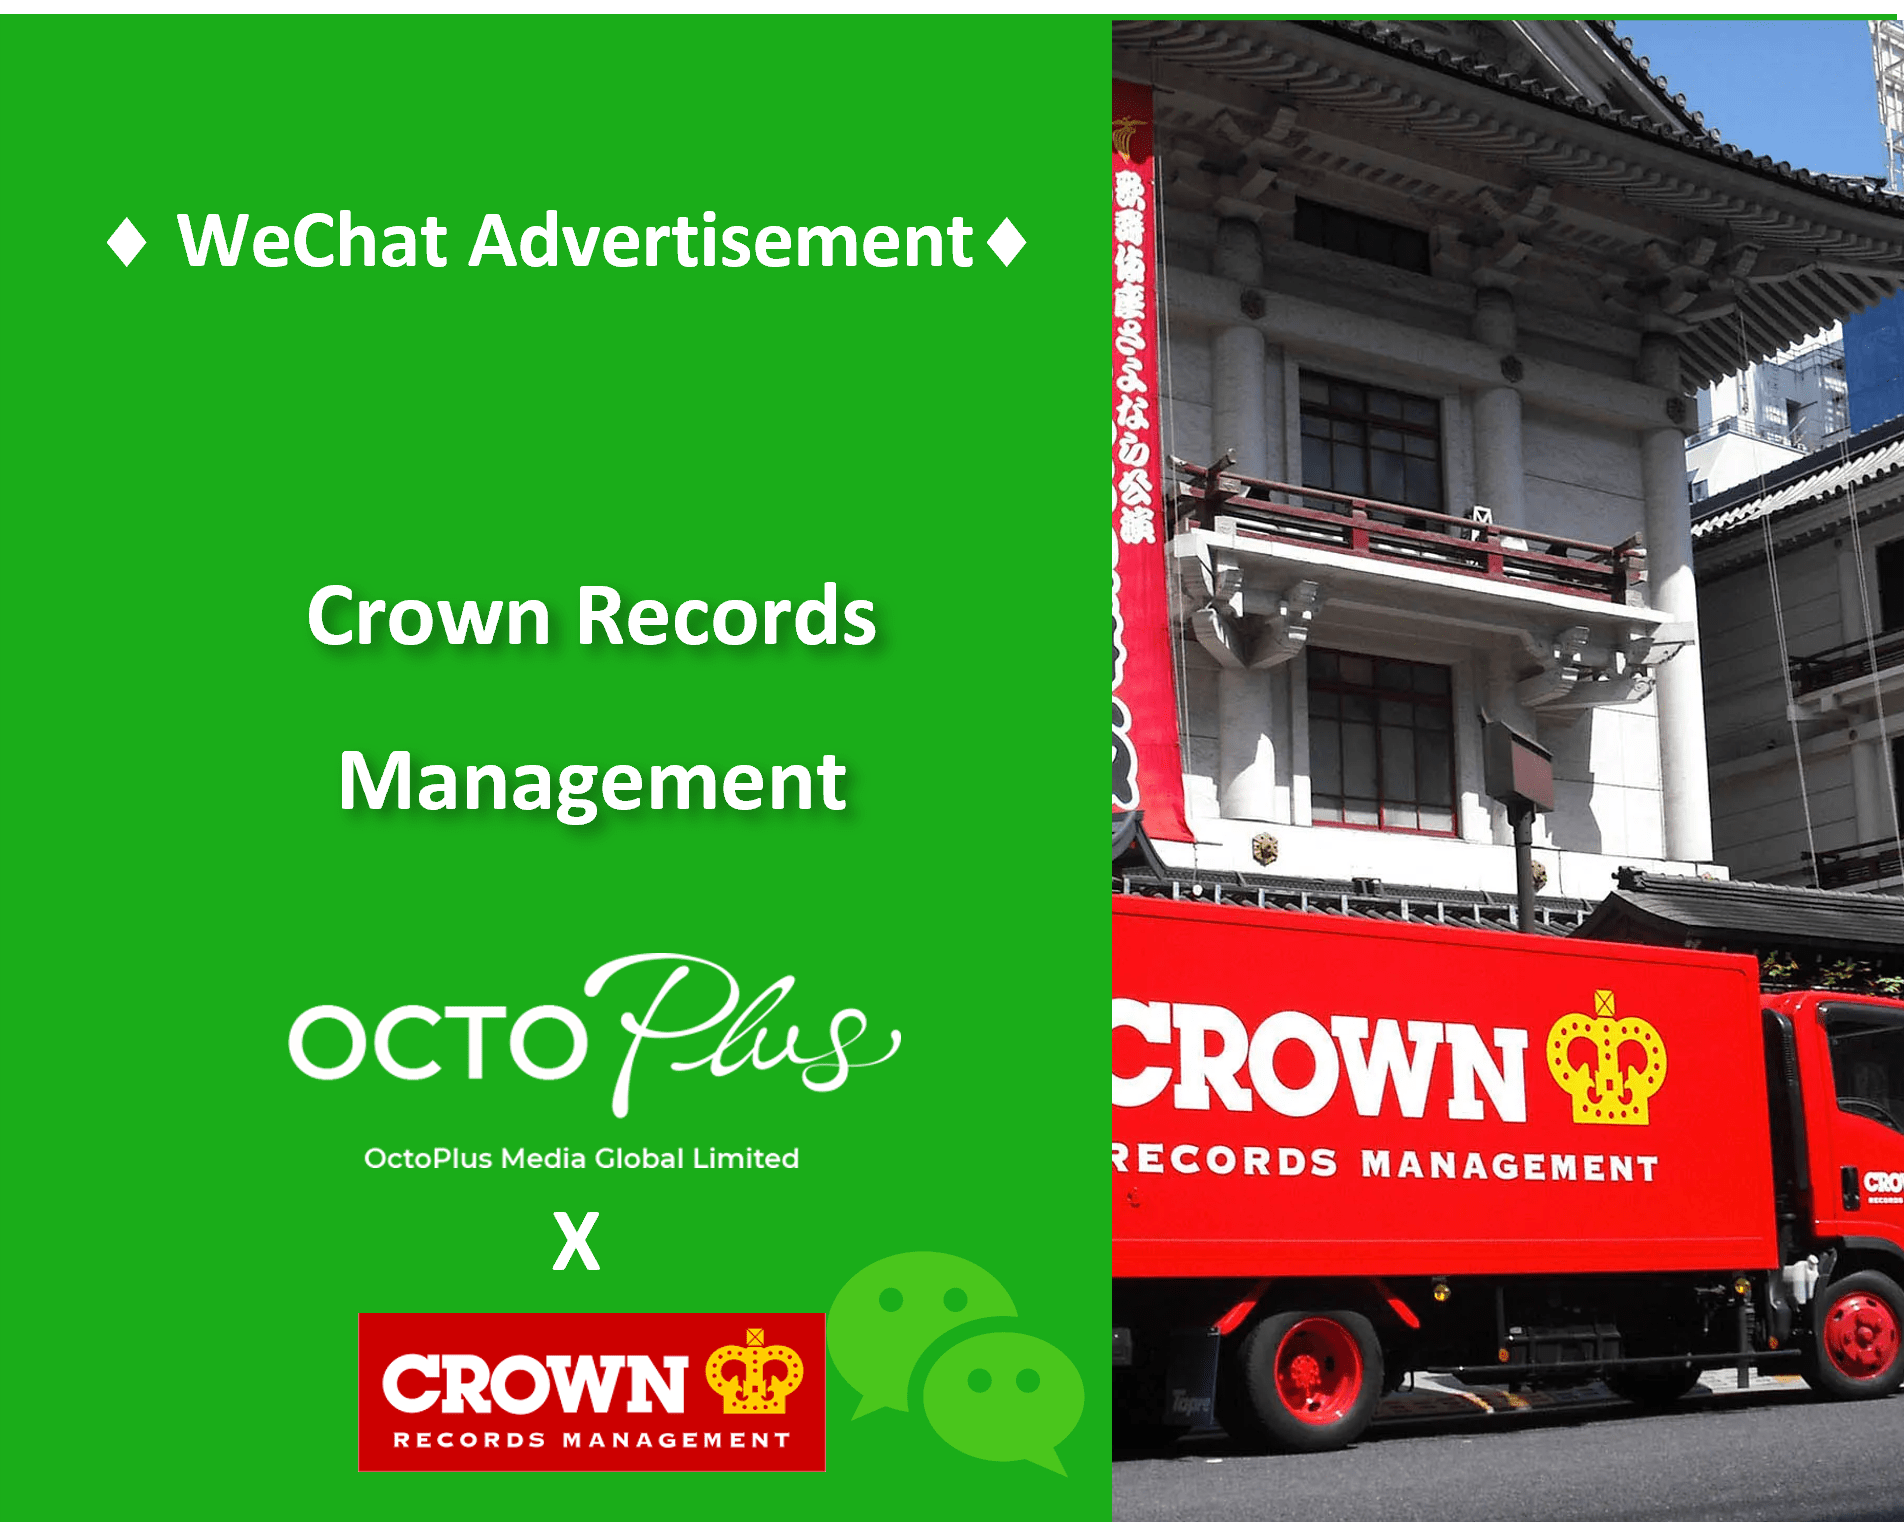 WeChat Ads - Crown records management